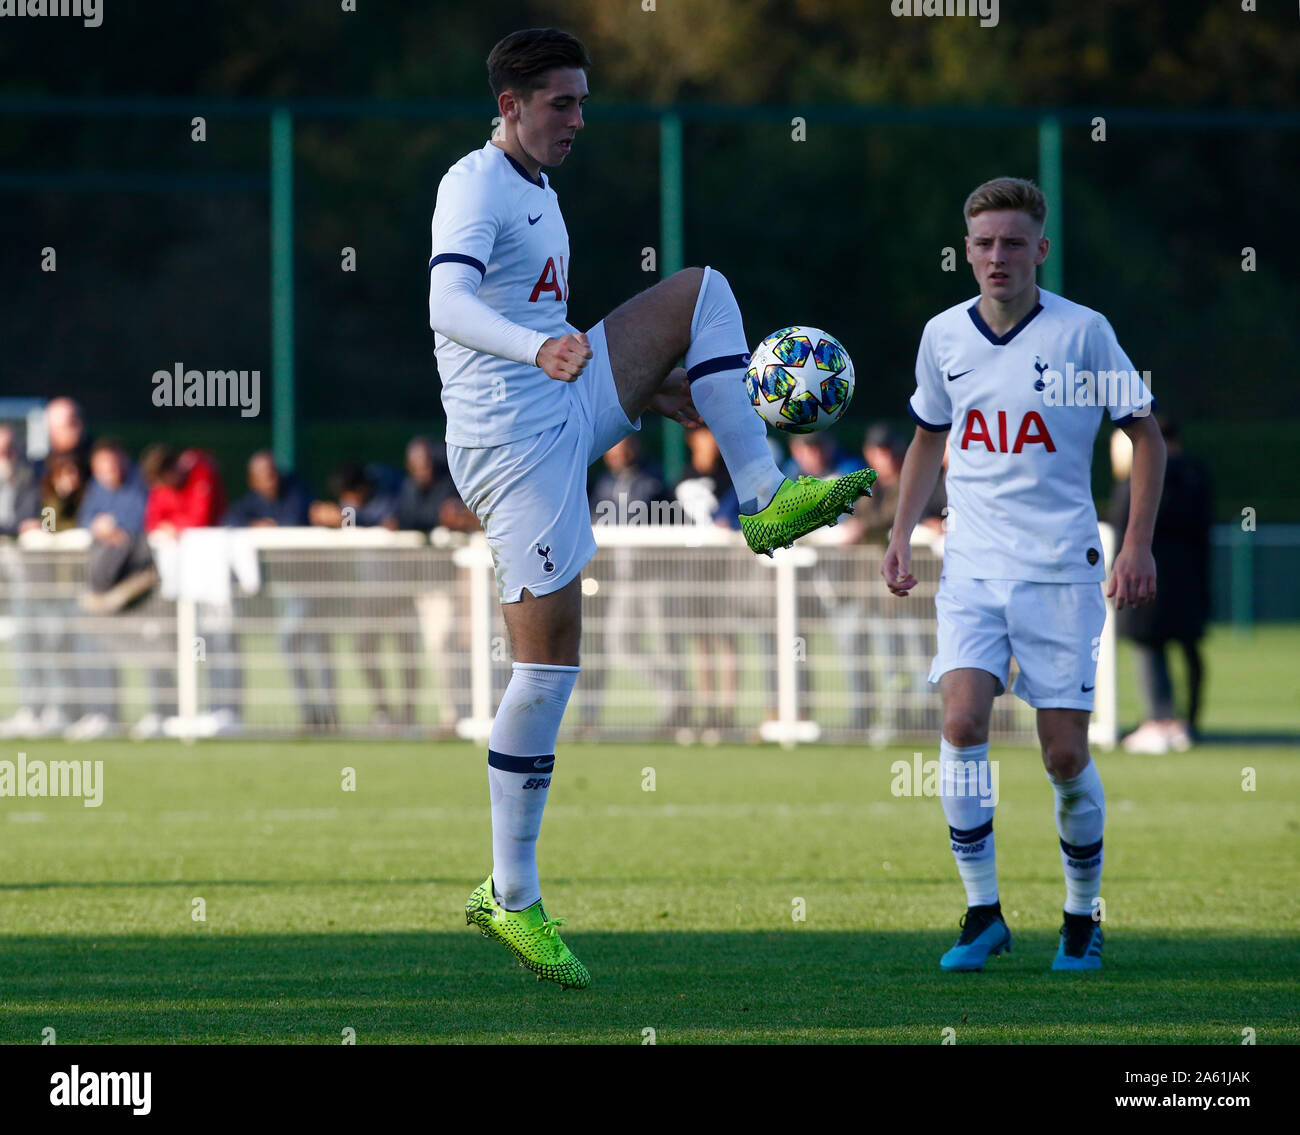 ENFIELD, ENGLAND. OCTOBER 22: Luis Binks of Tottenham Hotspur during UAFA Youth League between Tottenham Hotspur and Crvena zvezda ( Red Star Belgrade Stock Photo